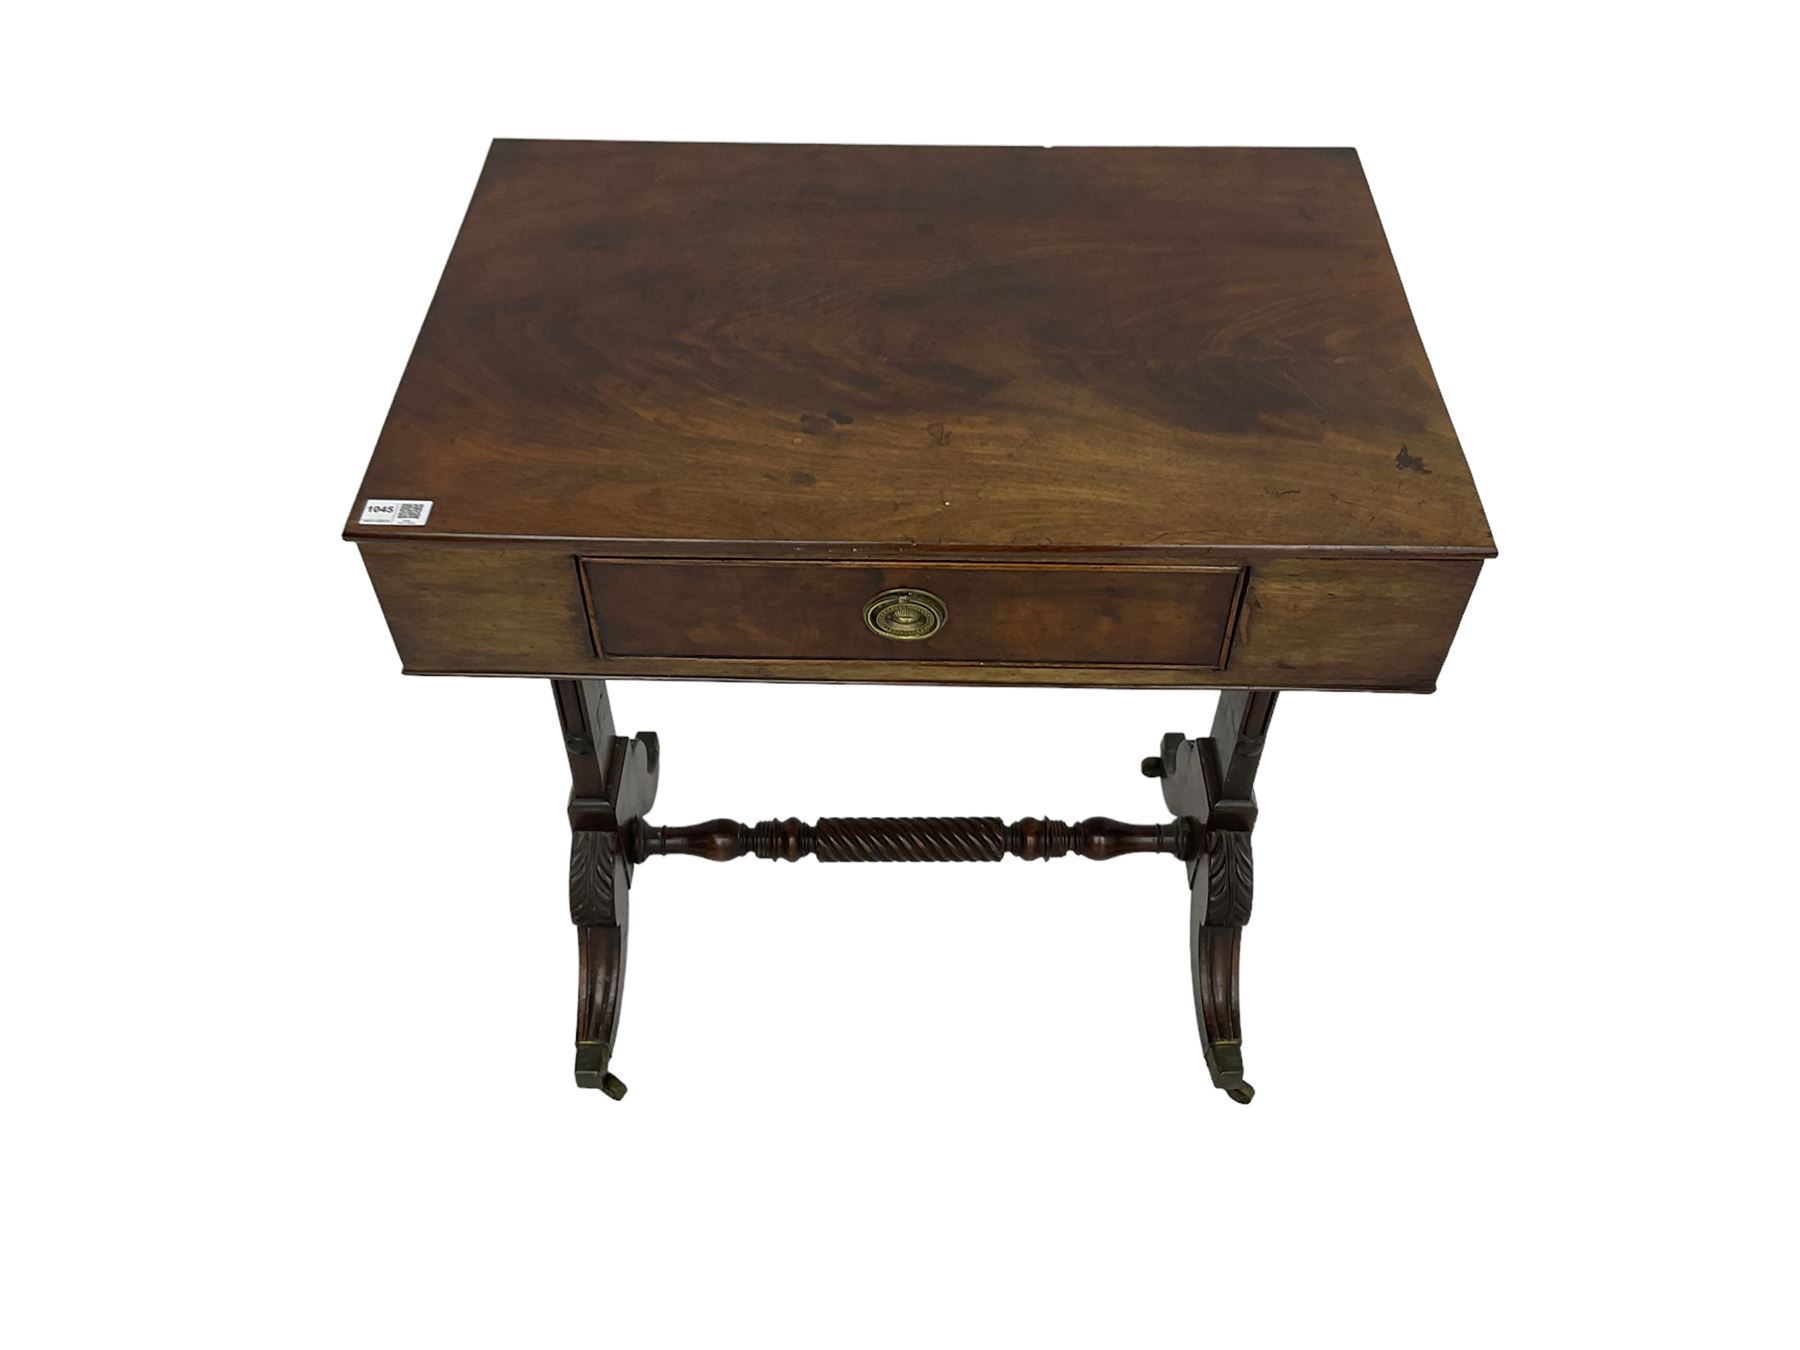 19th century mahogany side table - Image 6 of 6